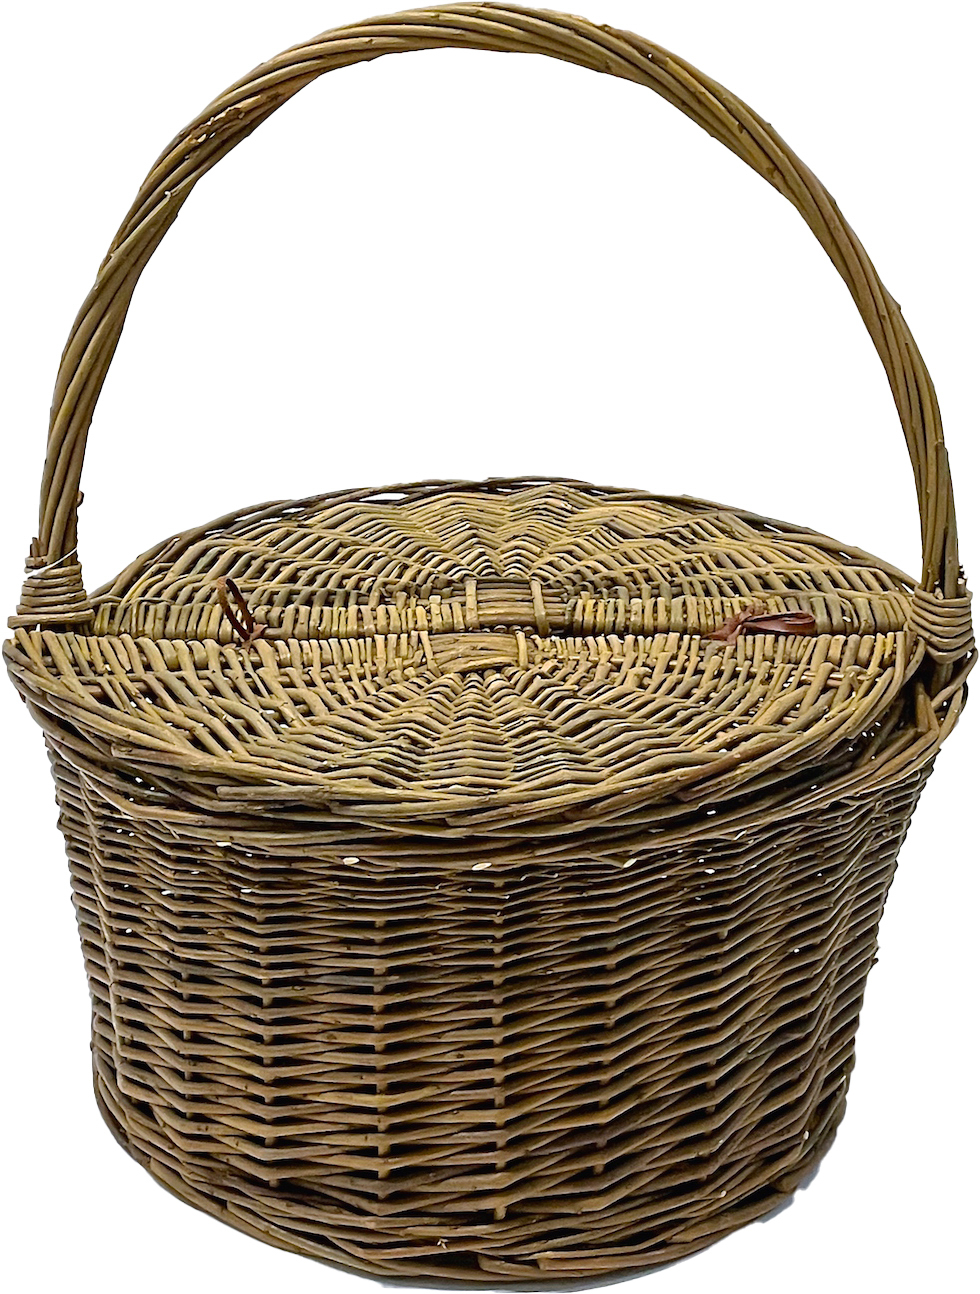 Double Lidded Carrying Basket